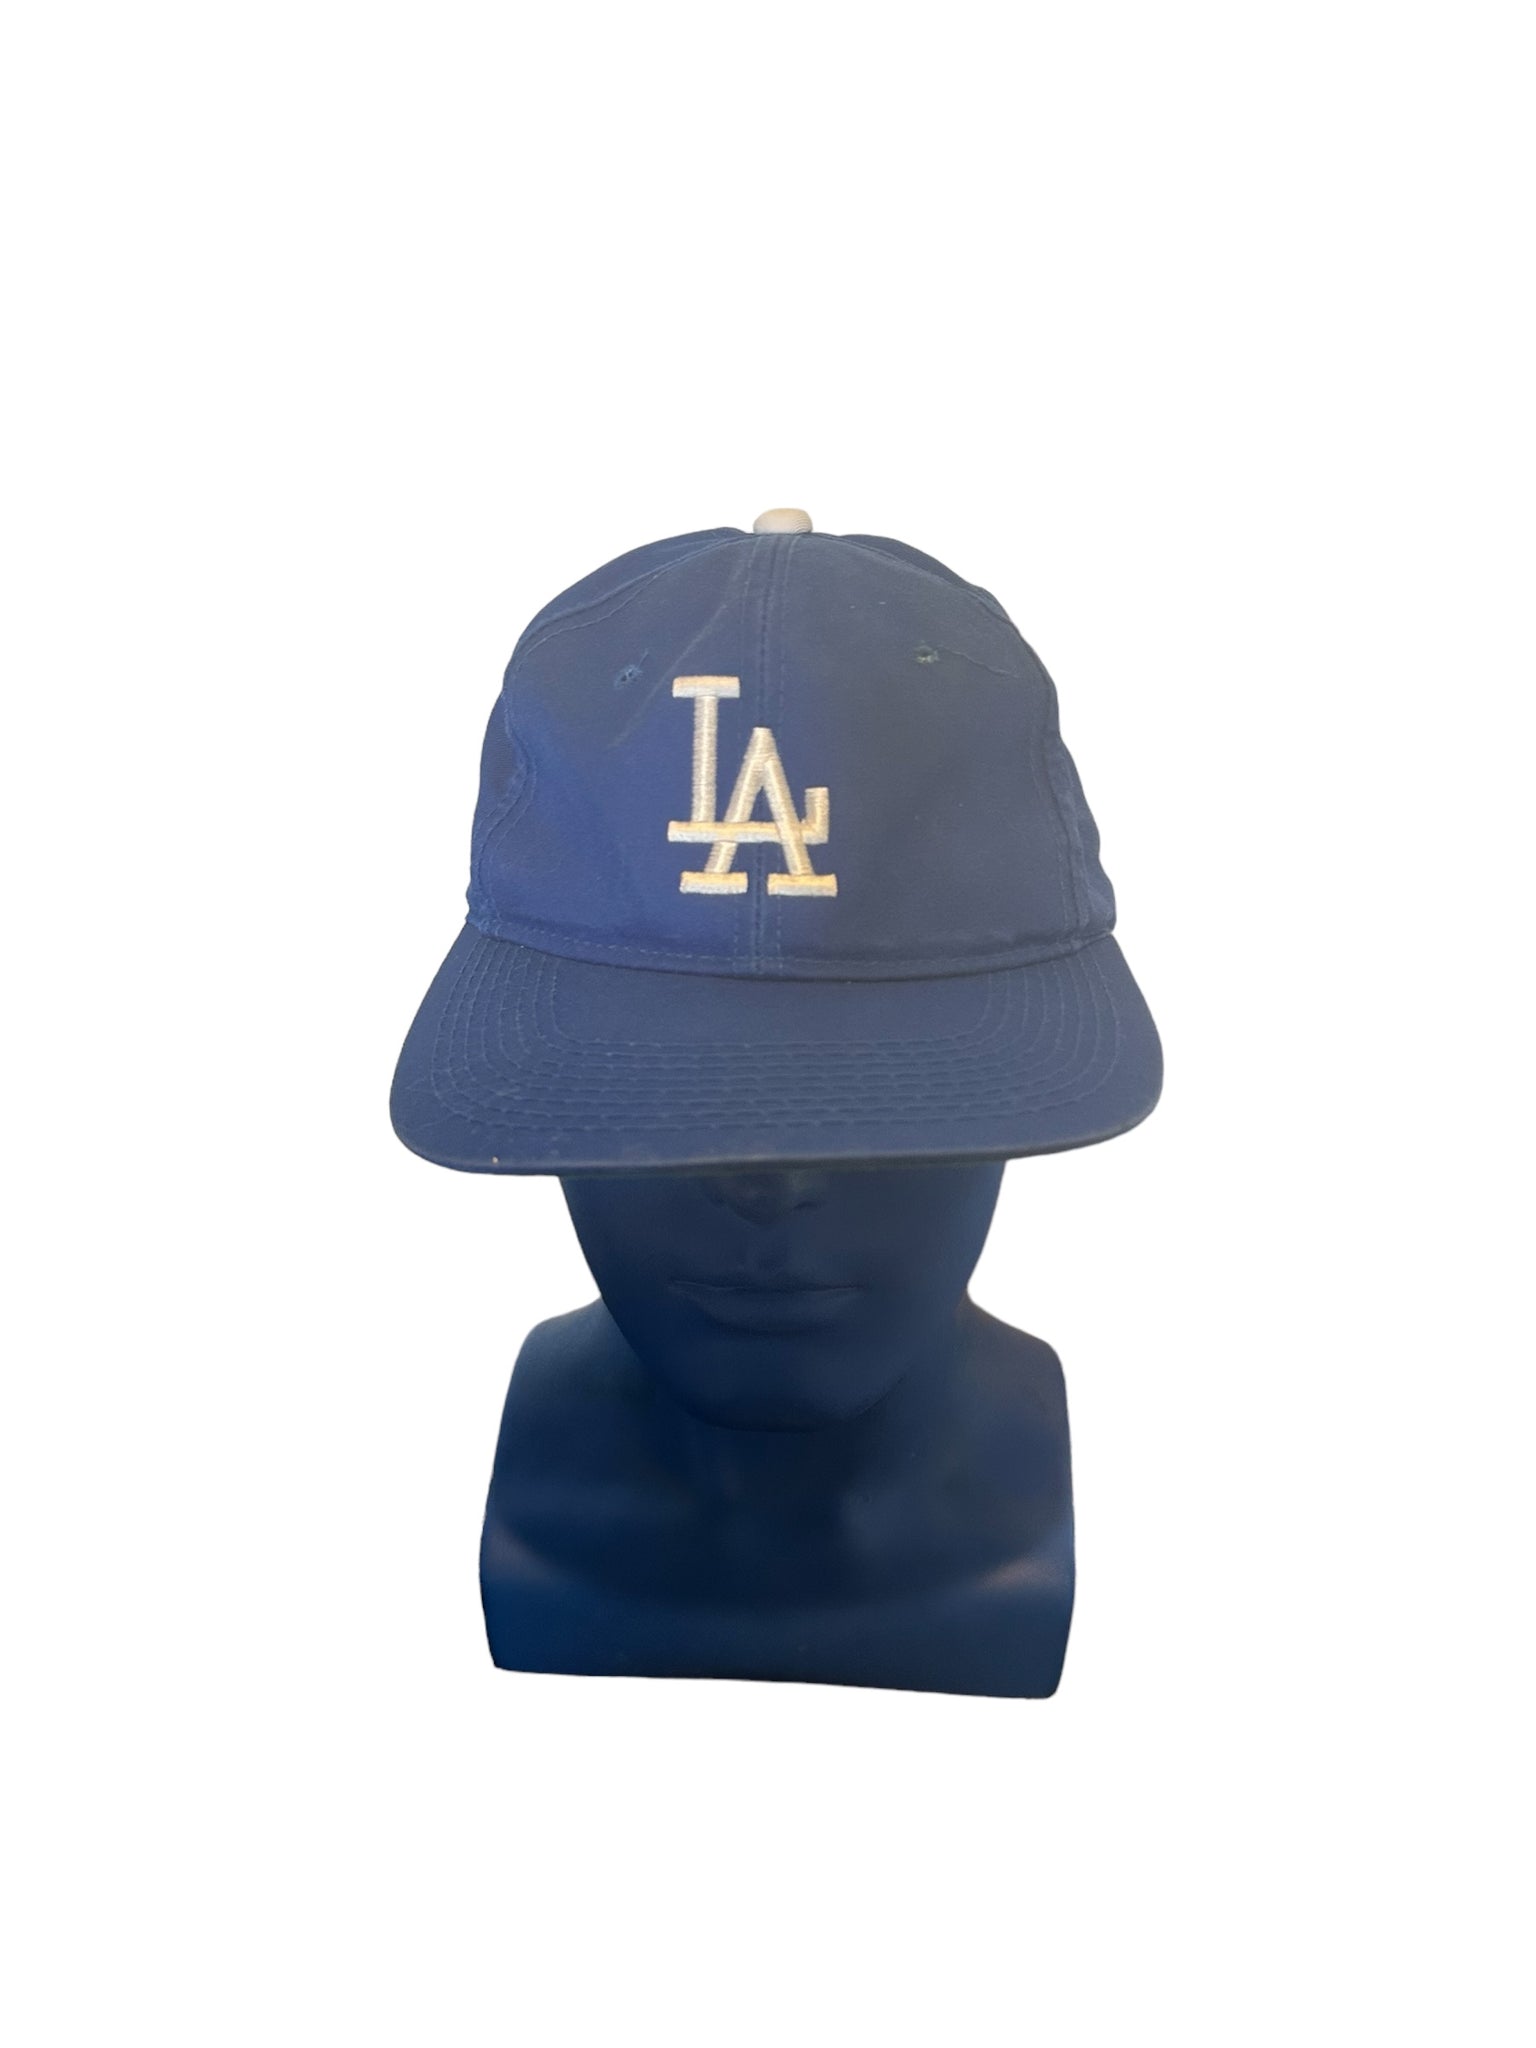 Vintage Los Angeles Dodgers Snapback Hat G Cap Brand Rare 90’s MLB